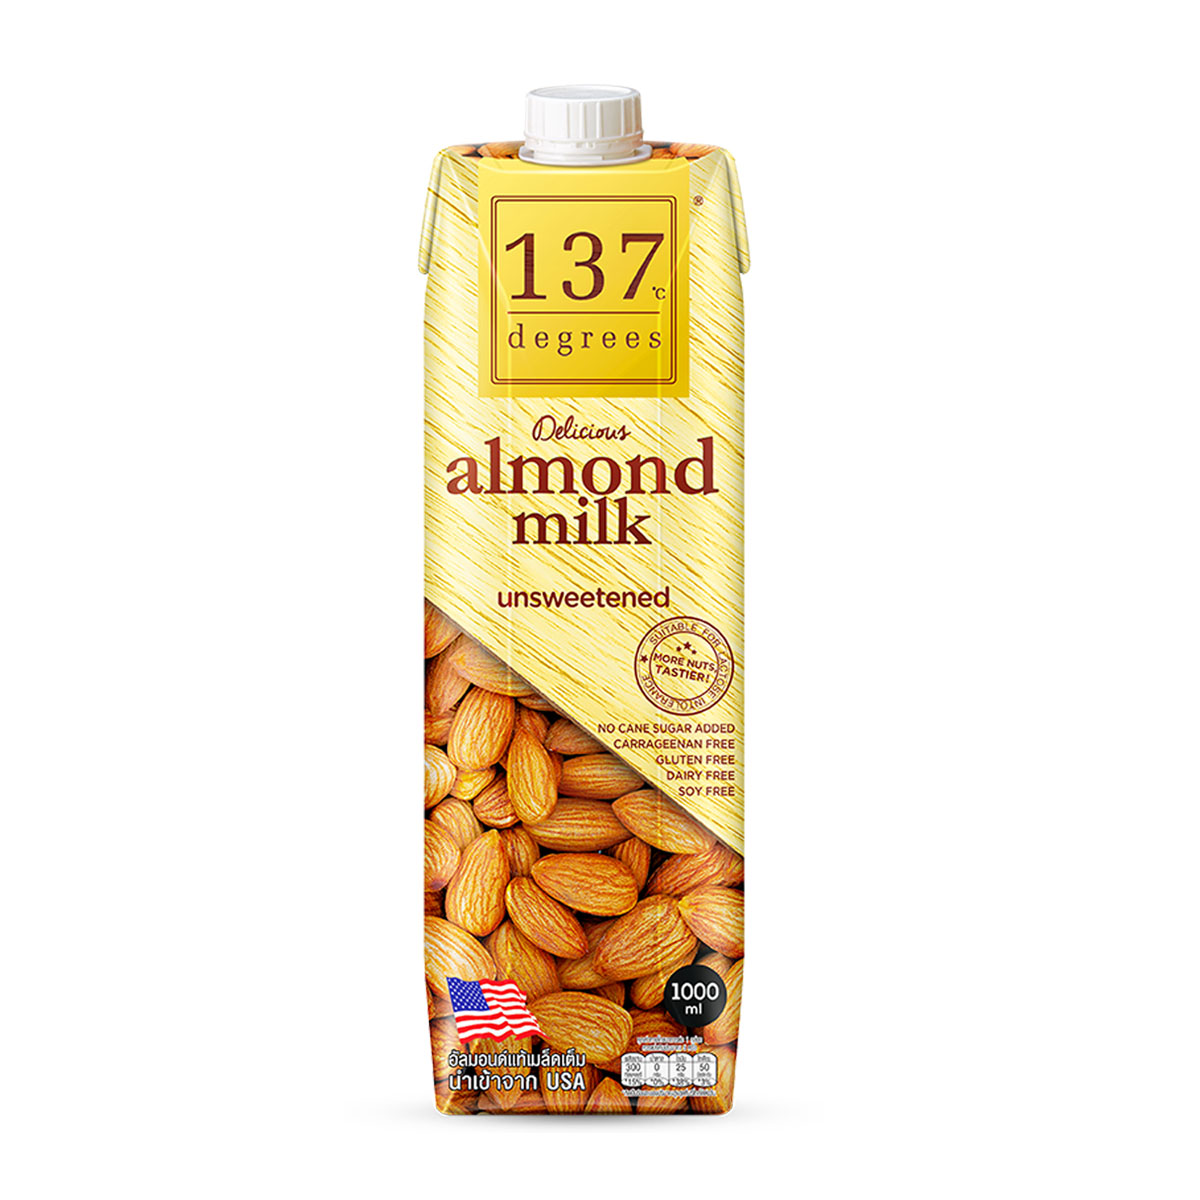 137 degrees Almond Milk Unsweetened